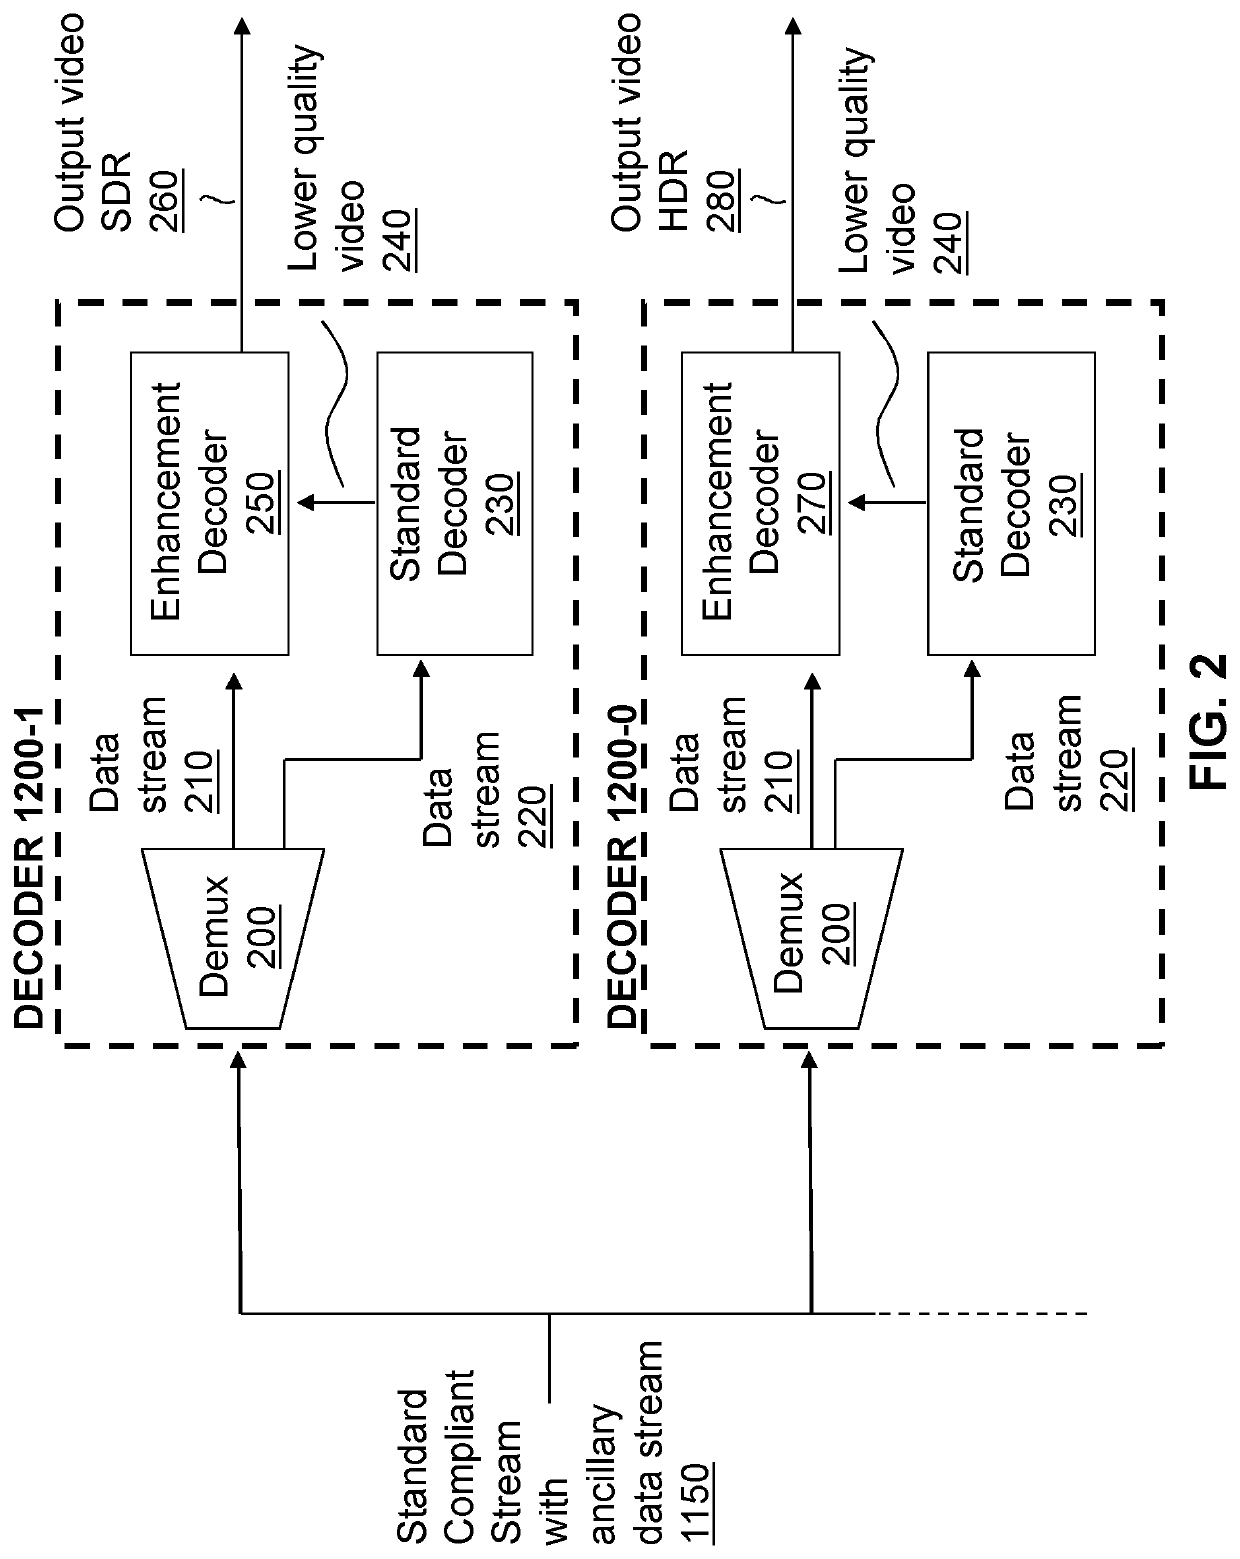 Colour conversion within a hierarchical coding scheme